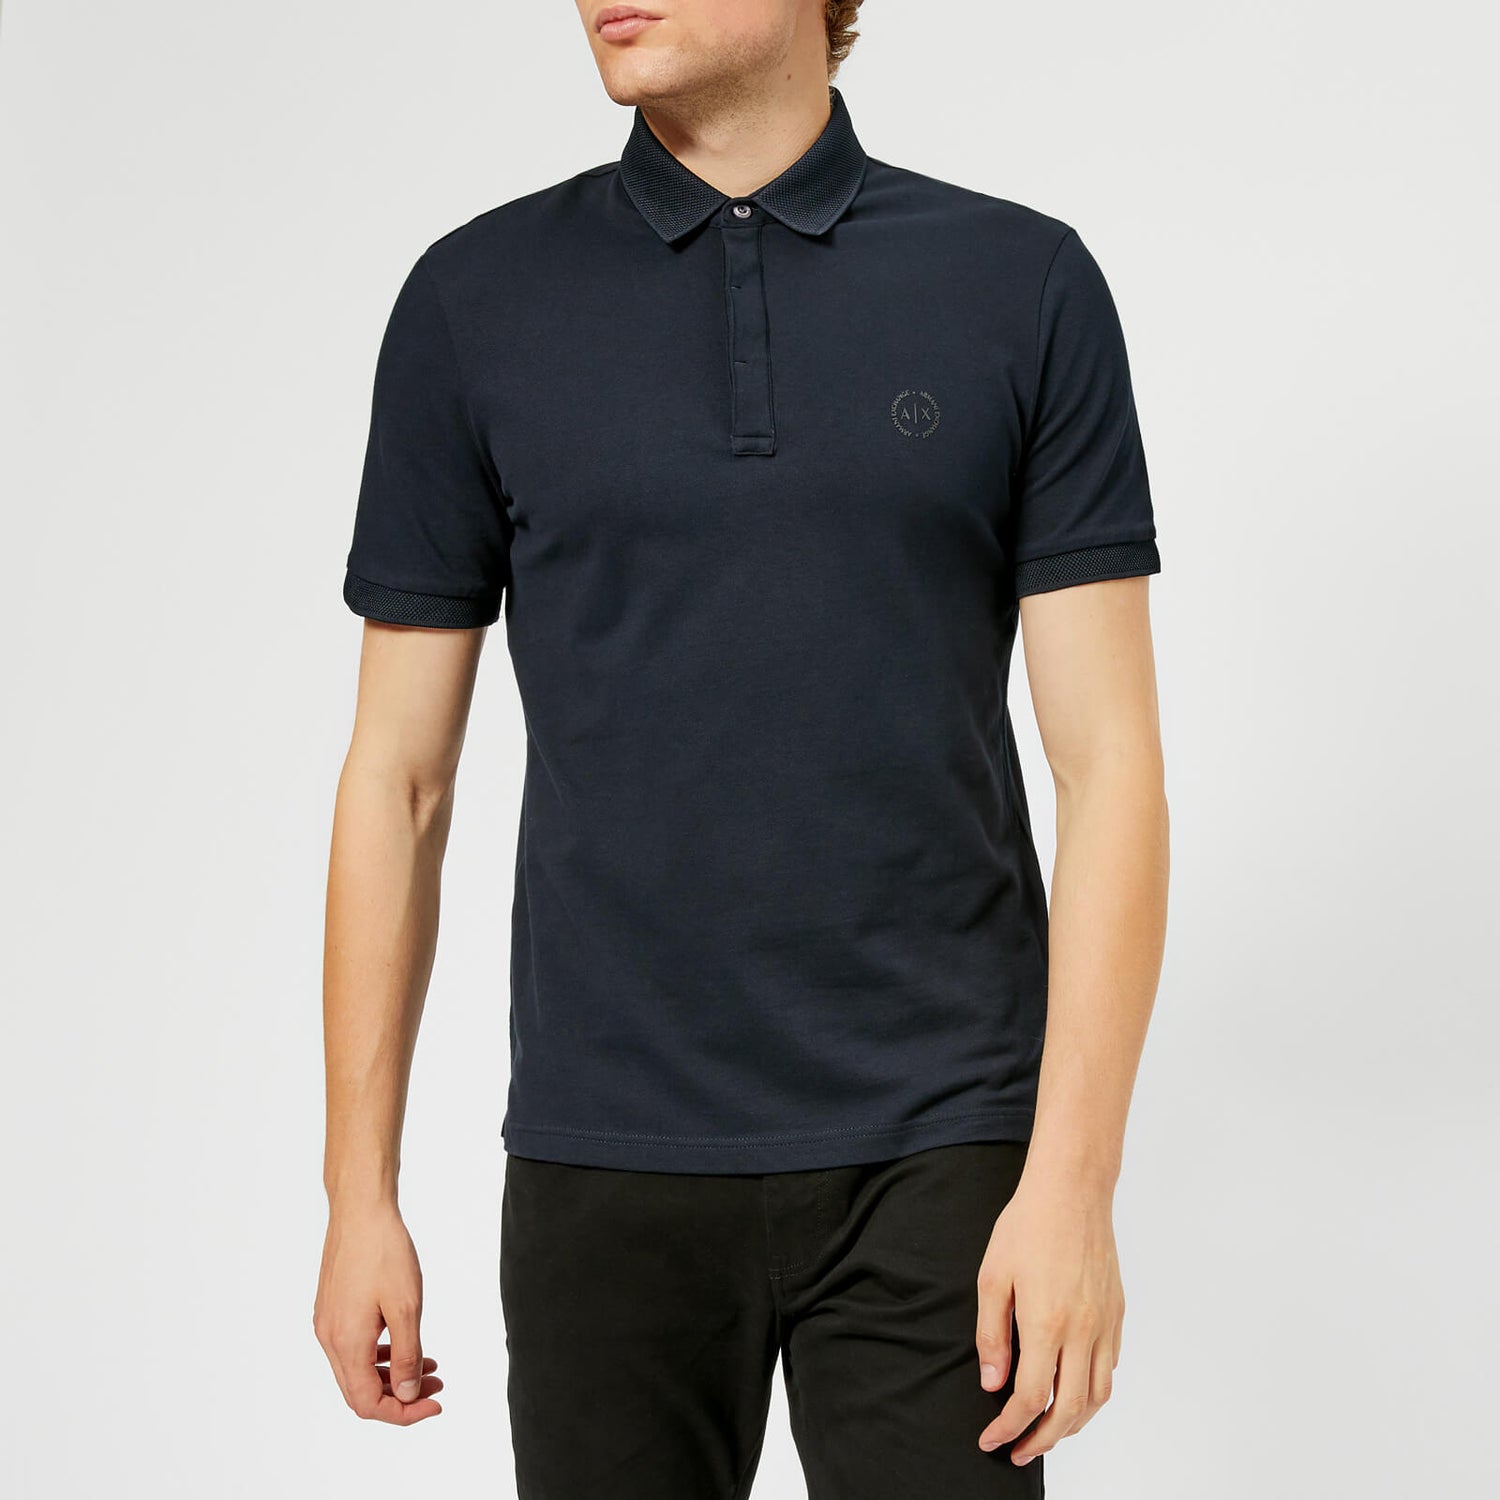 Armani Exchange Men's Basic Polo Shirt - Navy - S